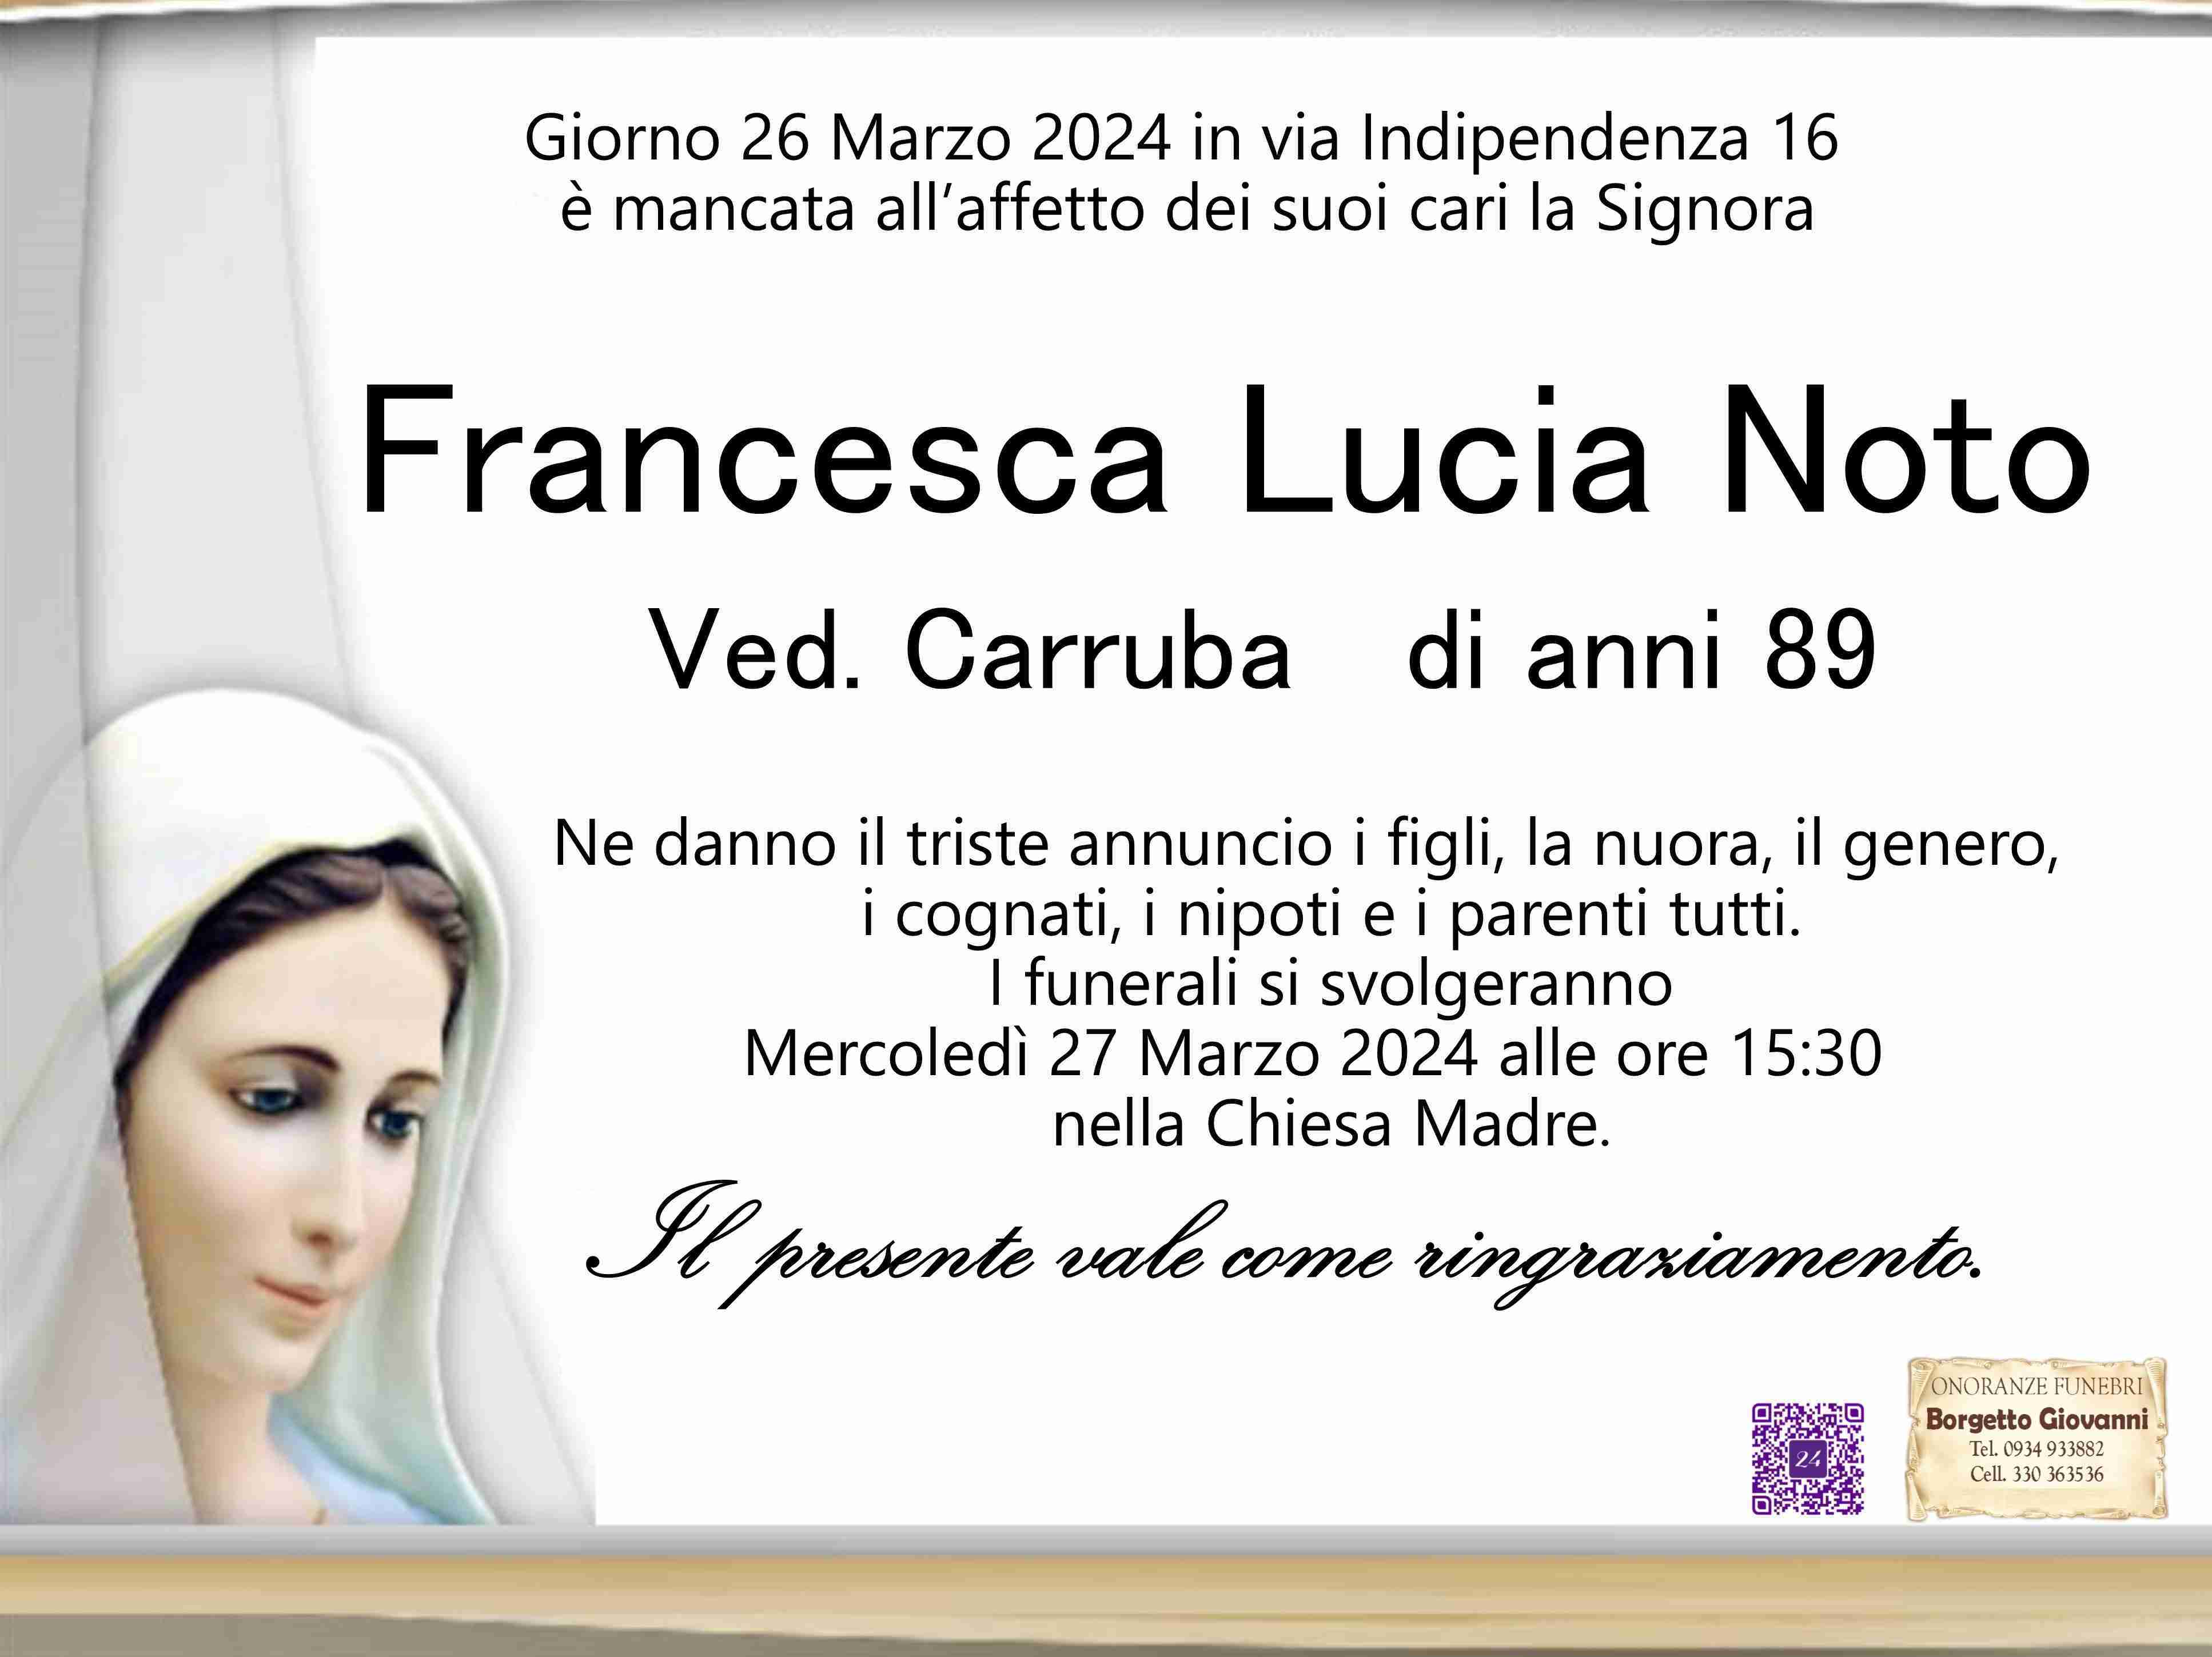 Francesca Lucia Noto